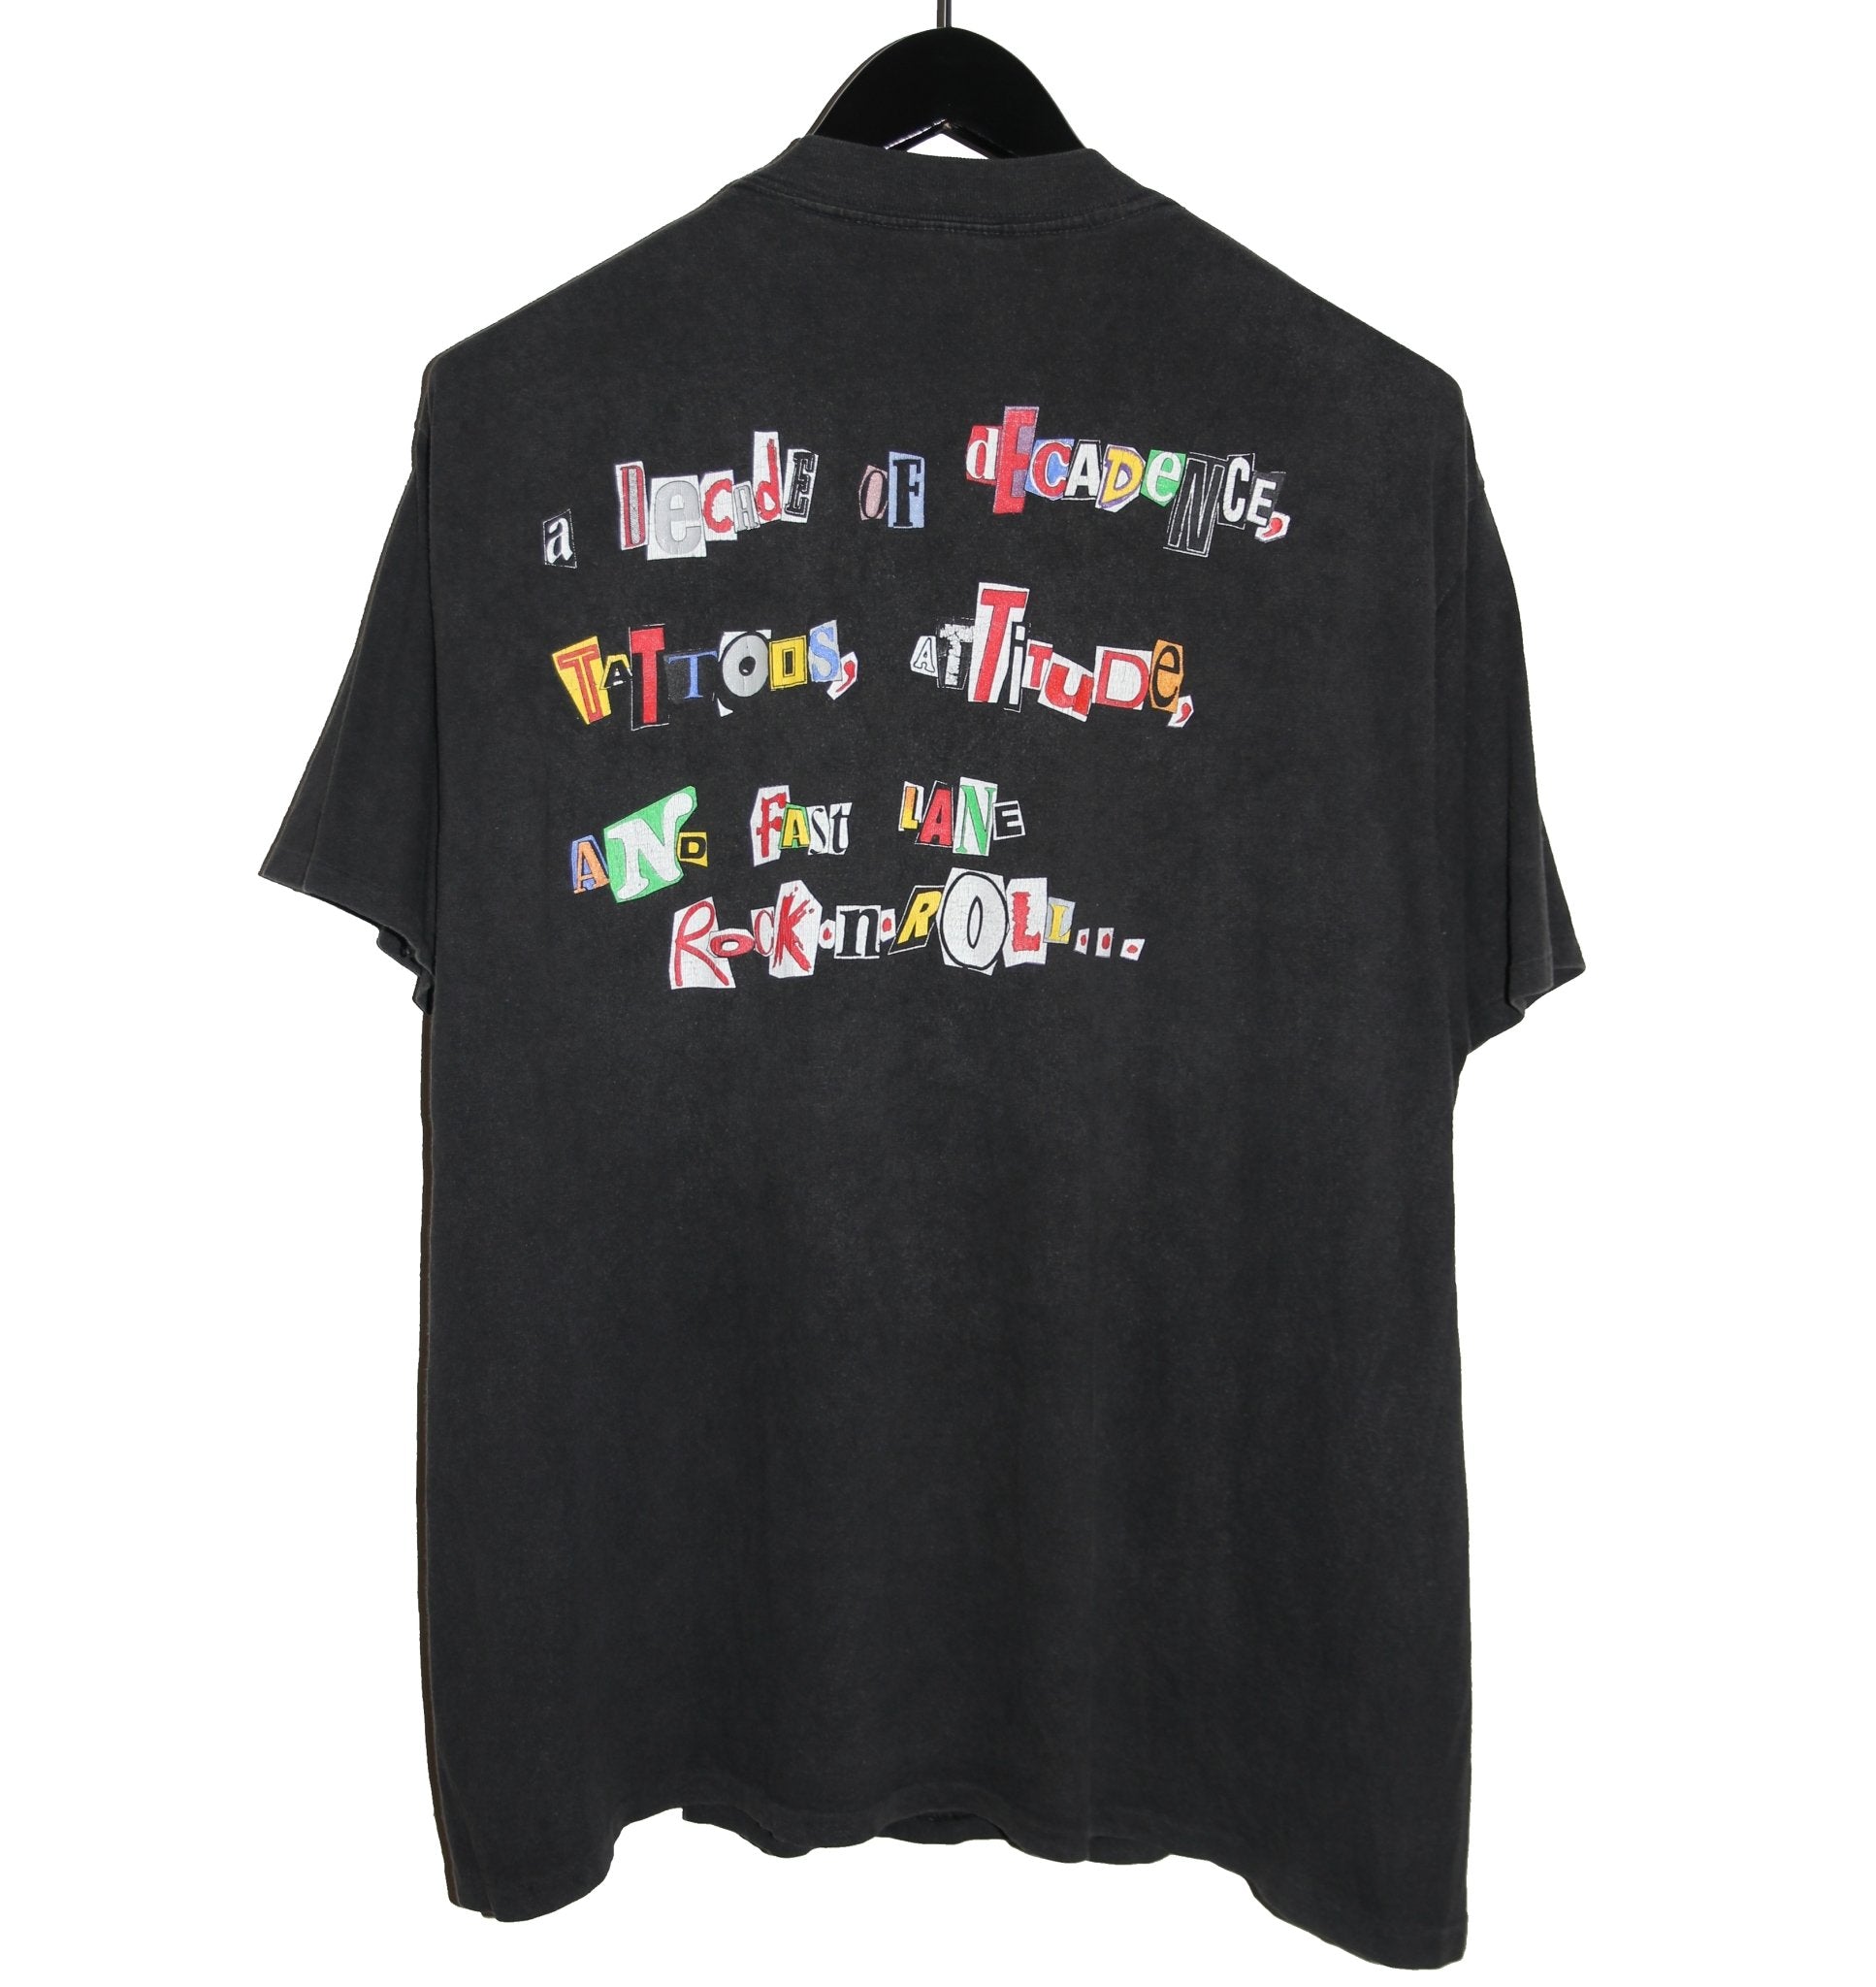 Motley Crue 1991 Decade of Decadence Shirt - Faded AU